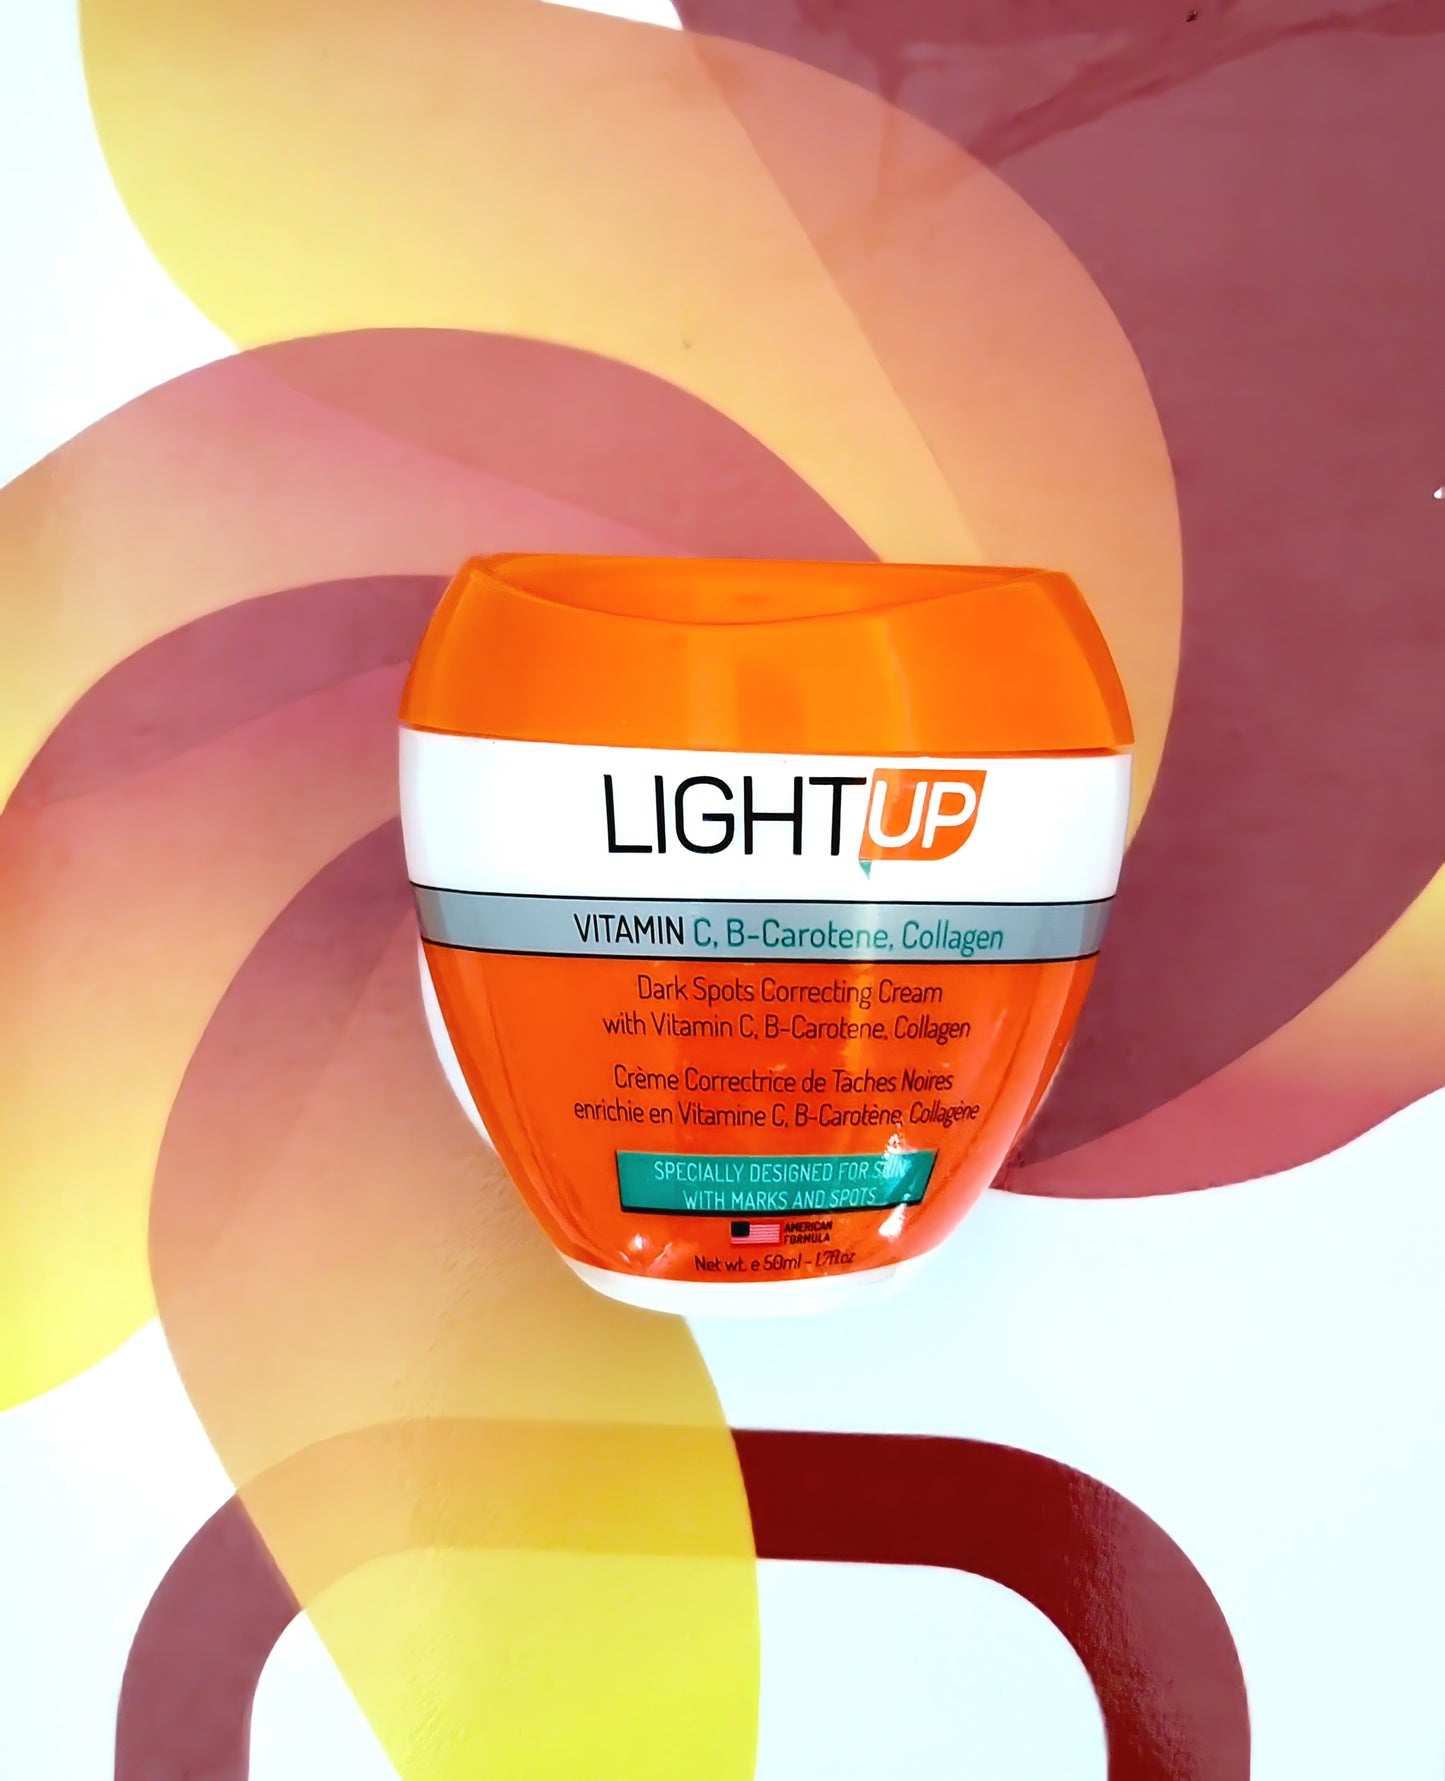 Light Up Dark Spots Correcting Cream Vita-Clariant with Vitamin C 50ml